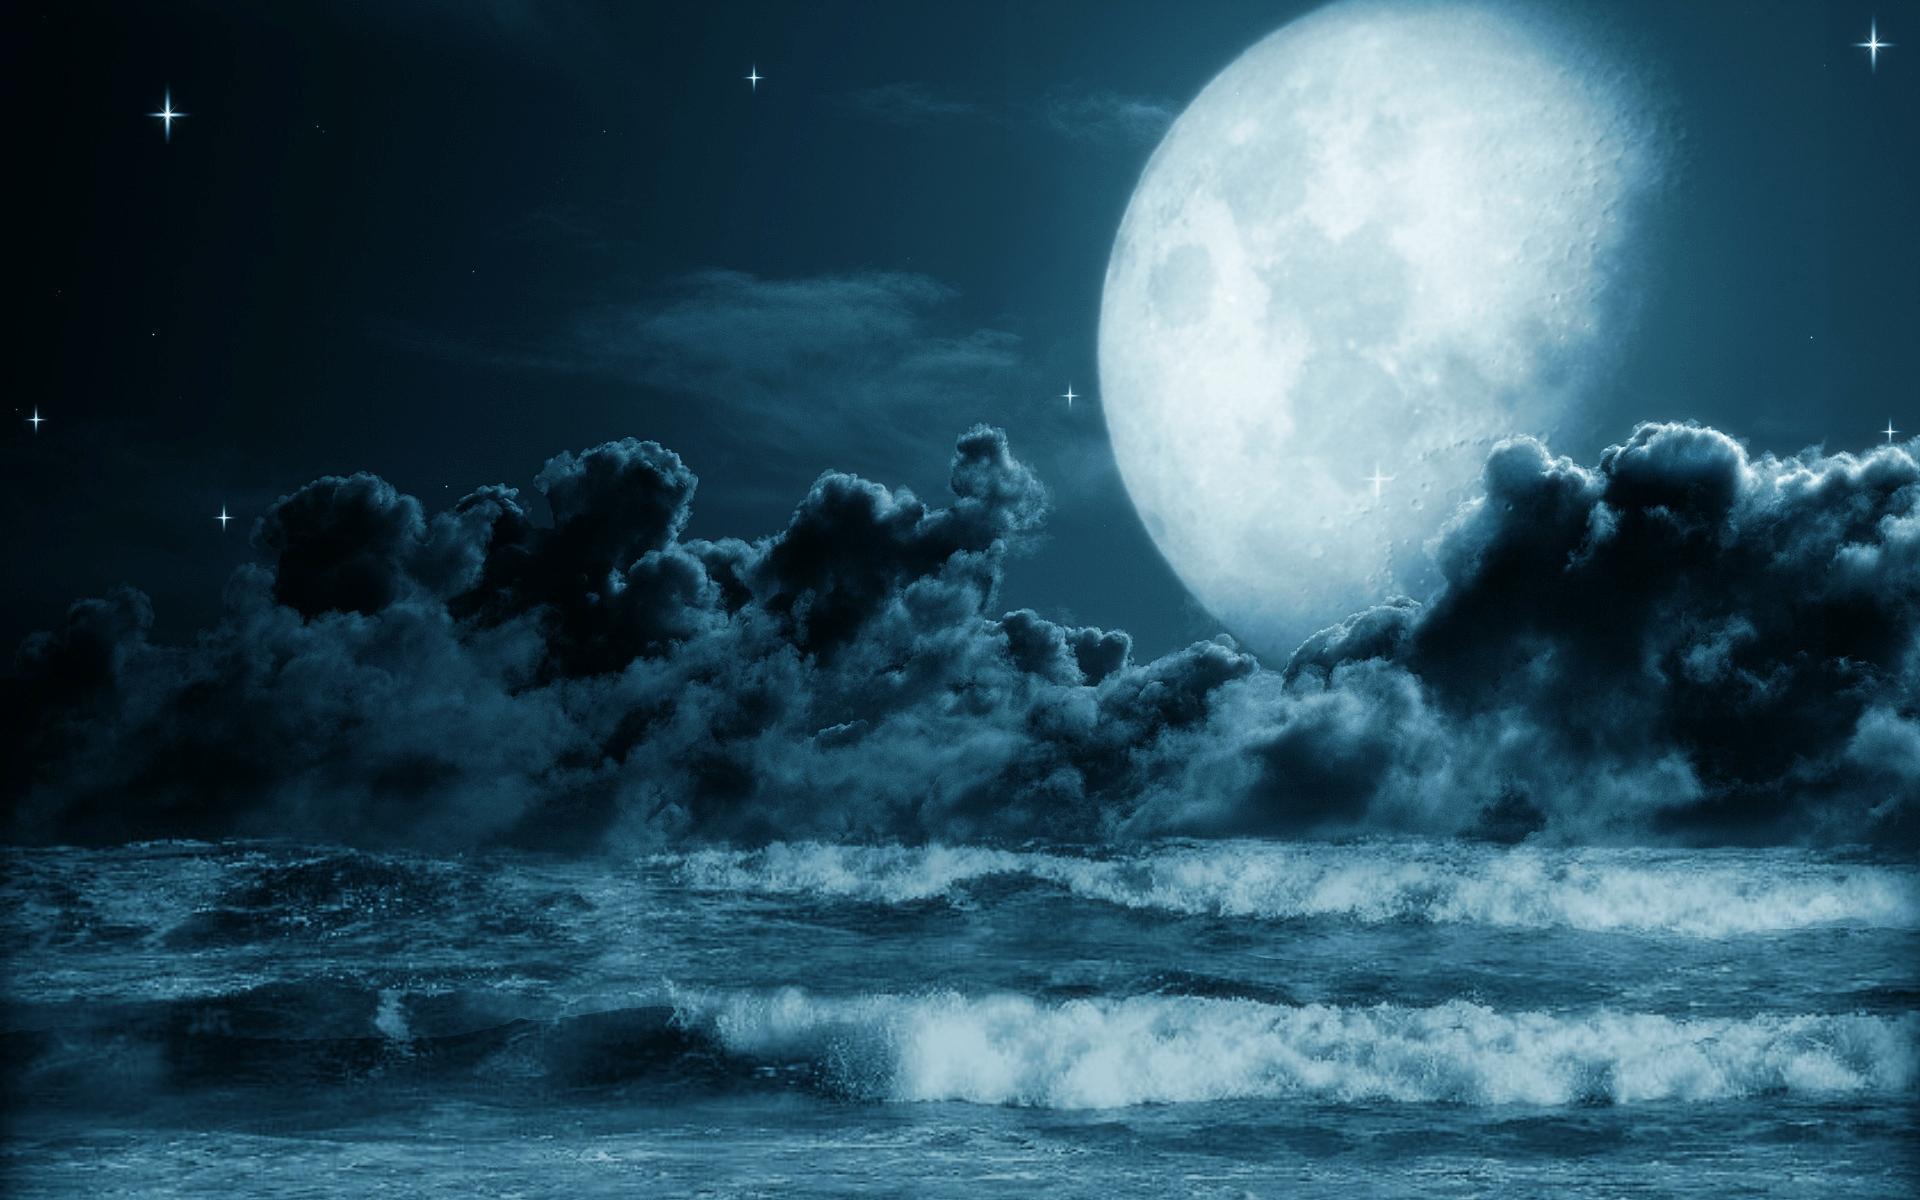 Full Moon Night PicsArt Background Free Stock Image